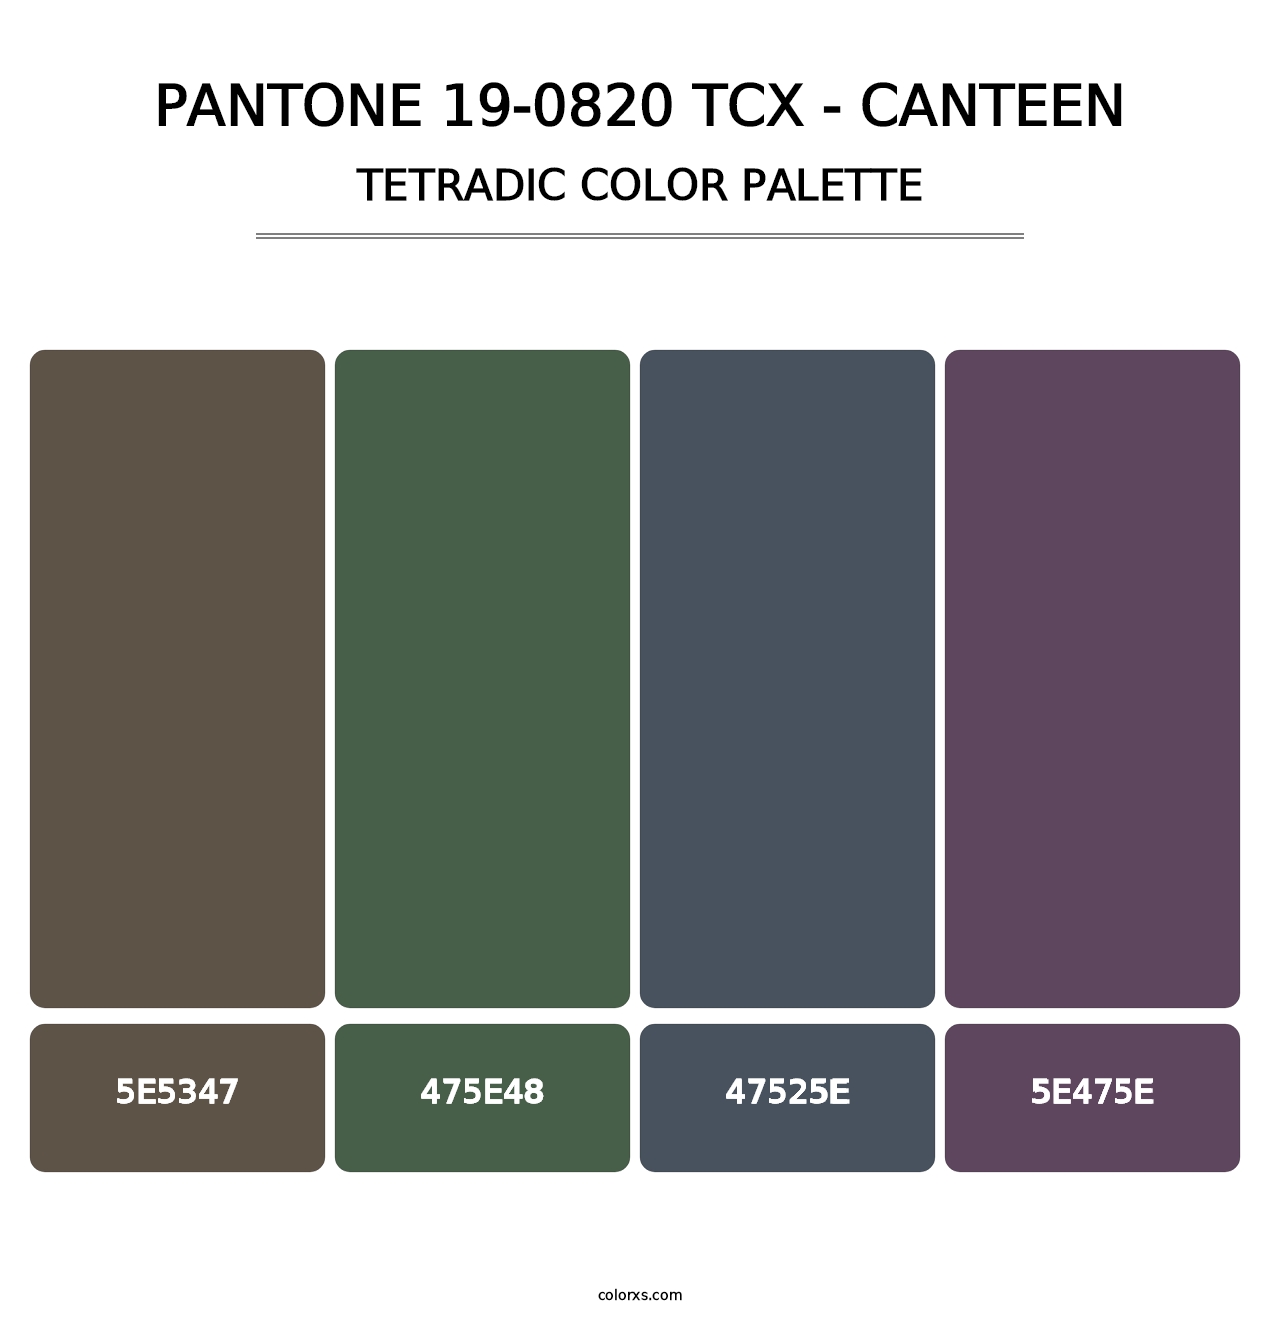 PANTONE 19-0820 TCX - Canteen - Tetradic Color Palette